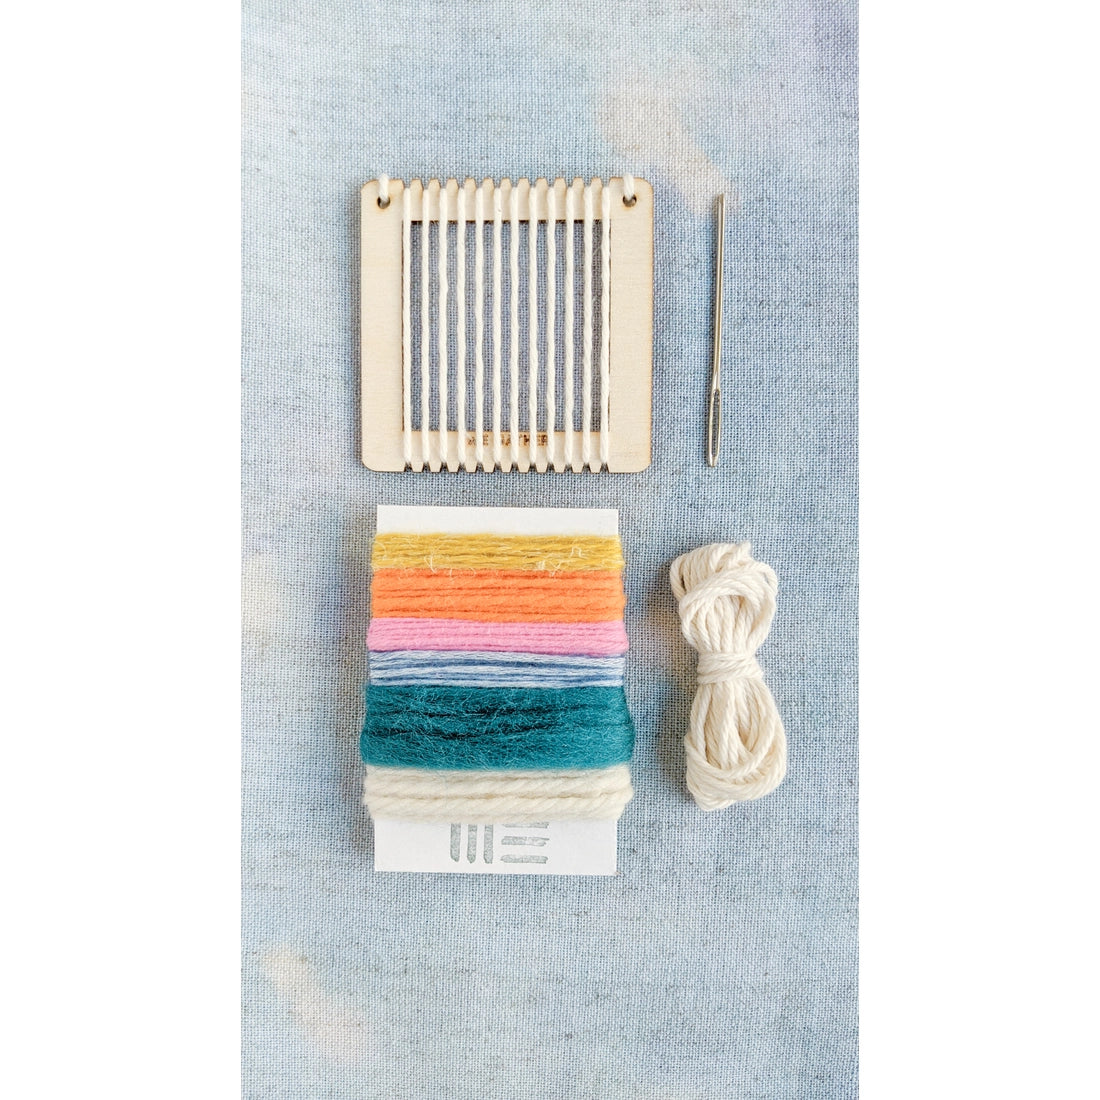 Mini Loom Weaving Kit